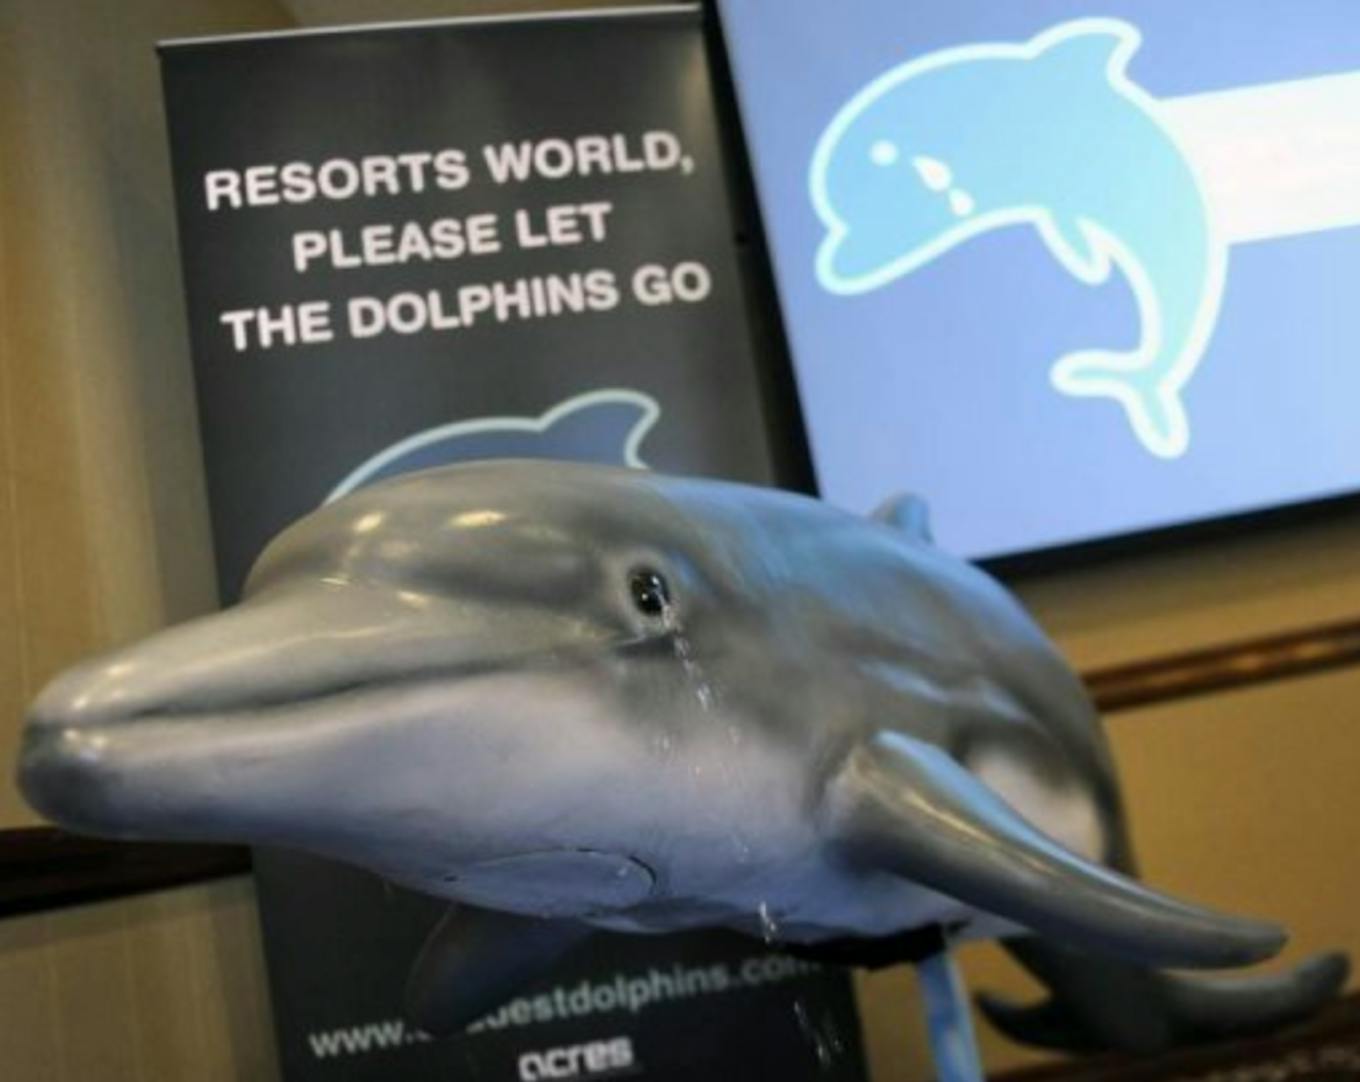 ACRES' world's saddest dolphins campaign